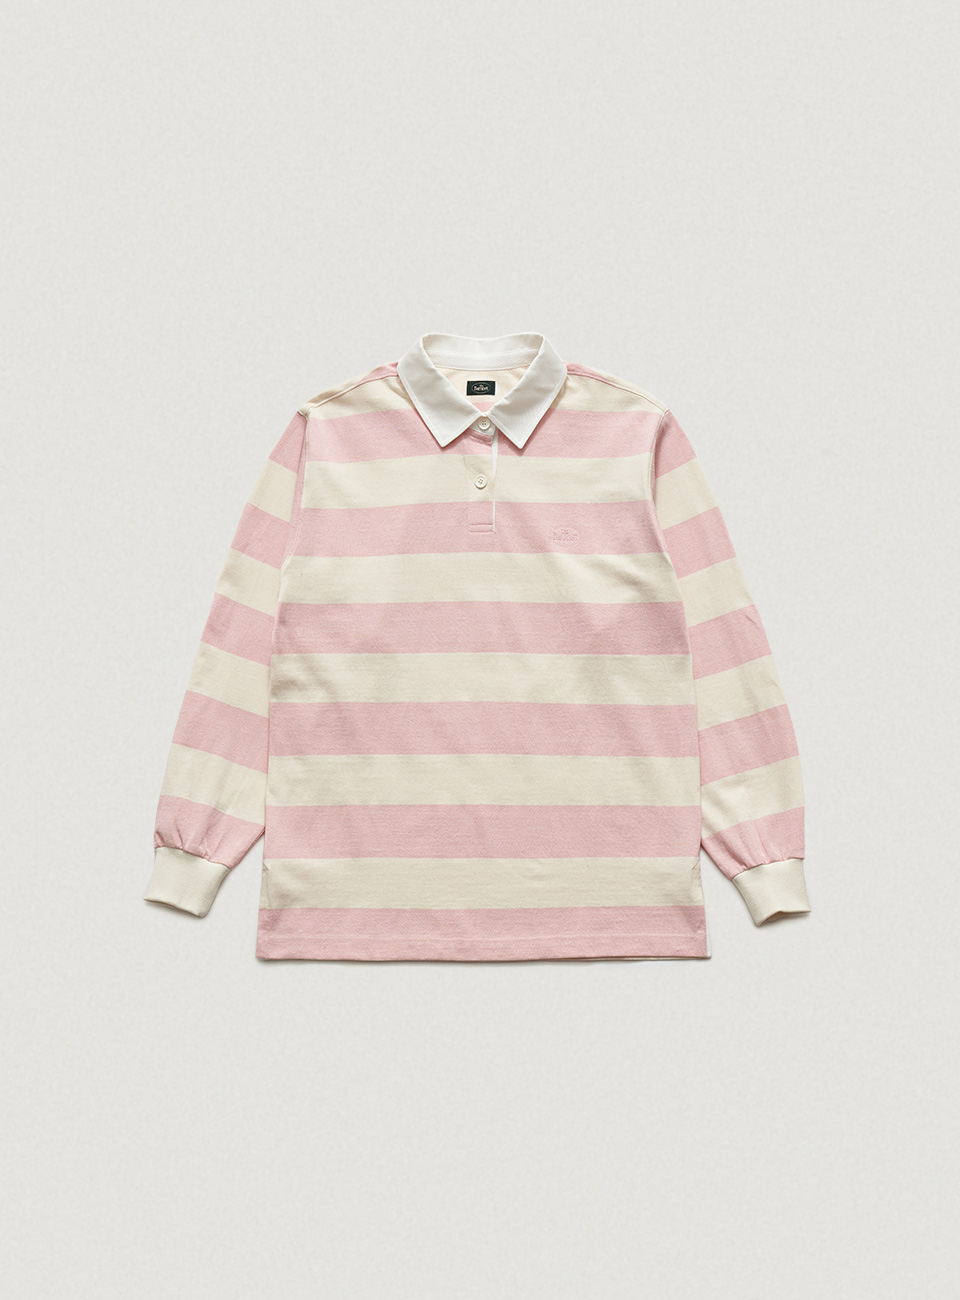 Pink Classic Striped Rugby Shirt [6월 중순 순차 배송]